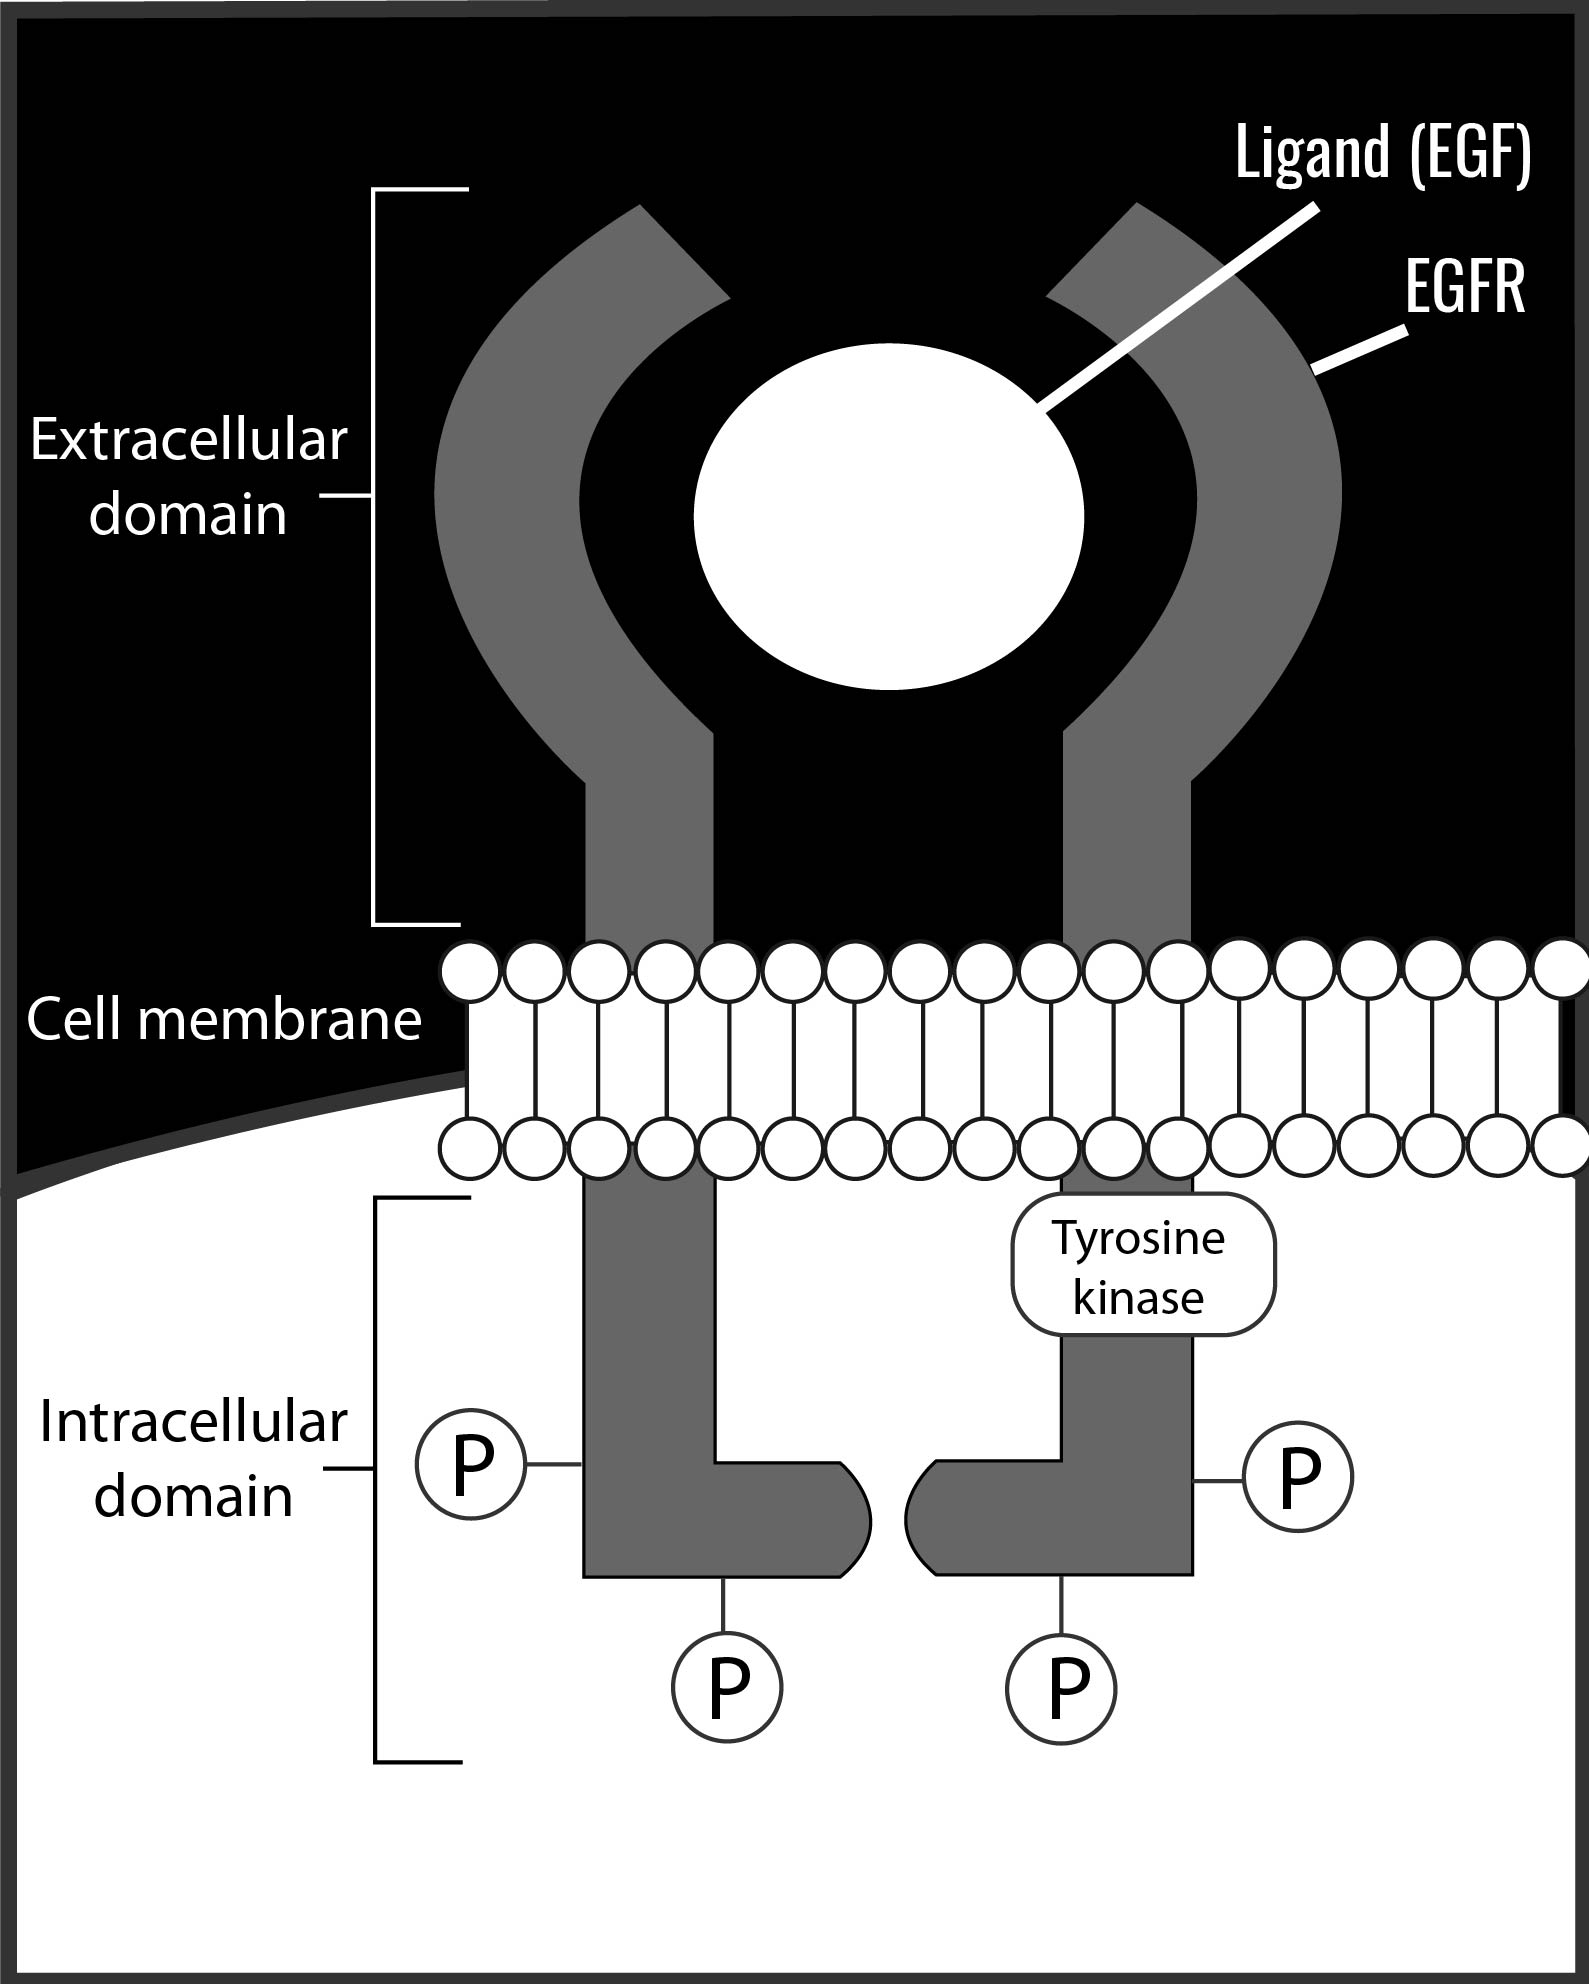 epidermal growth factor receptor (EGFR)